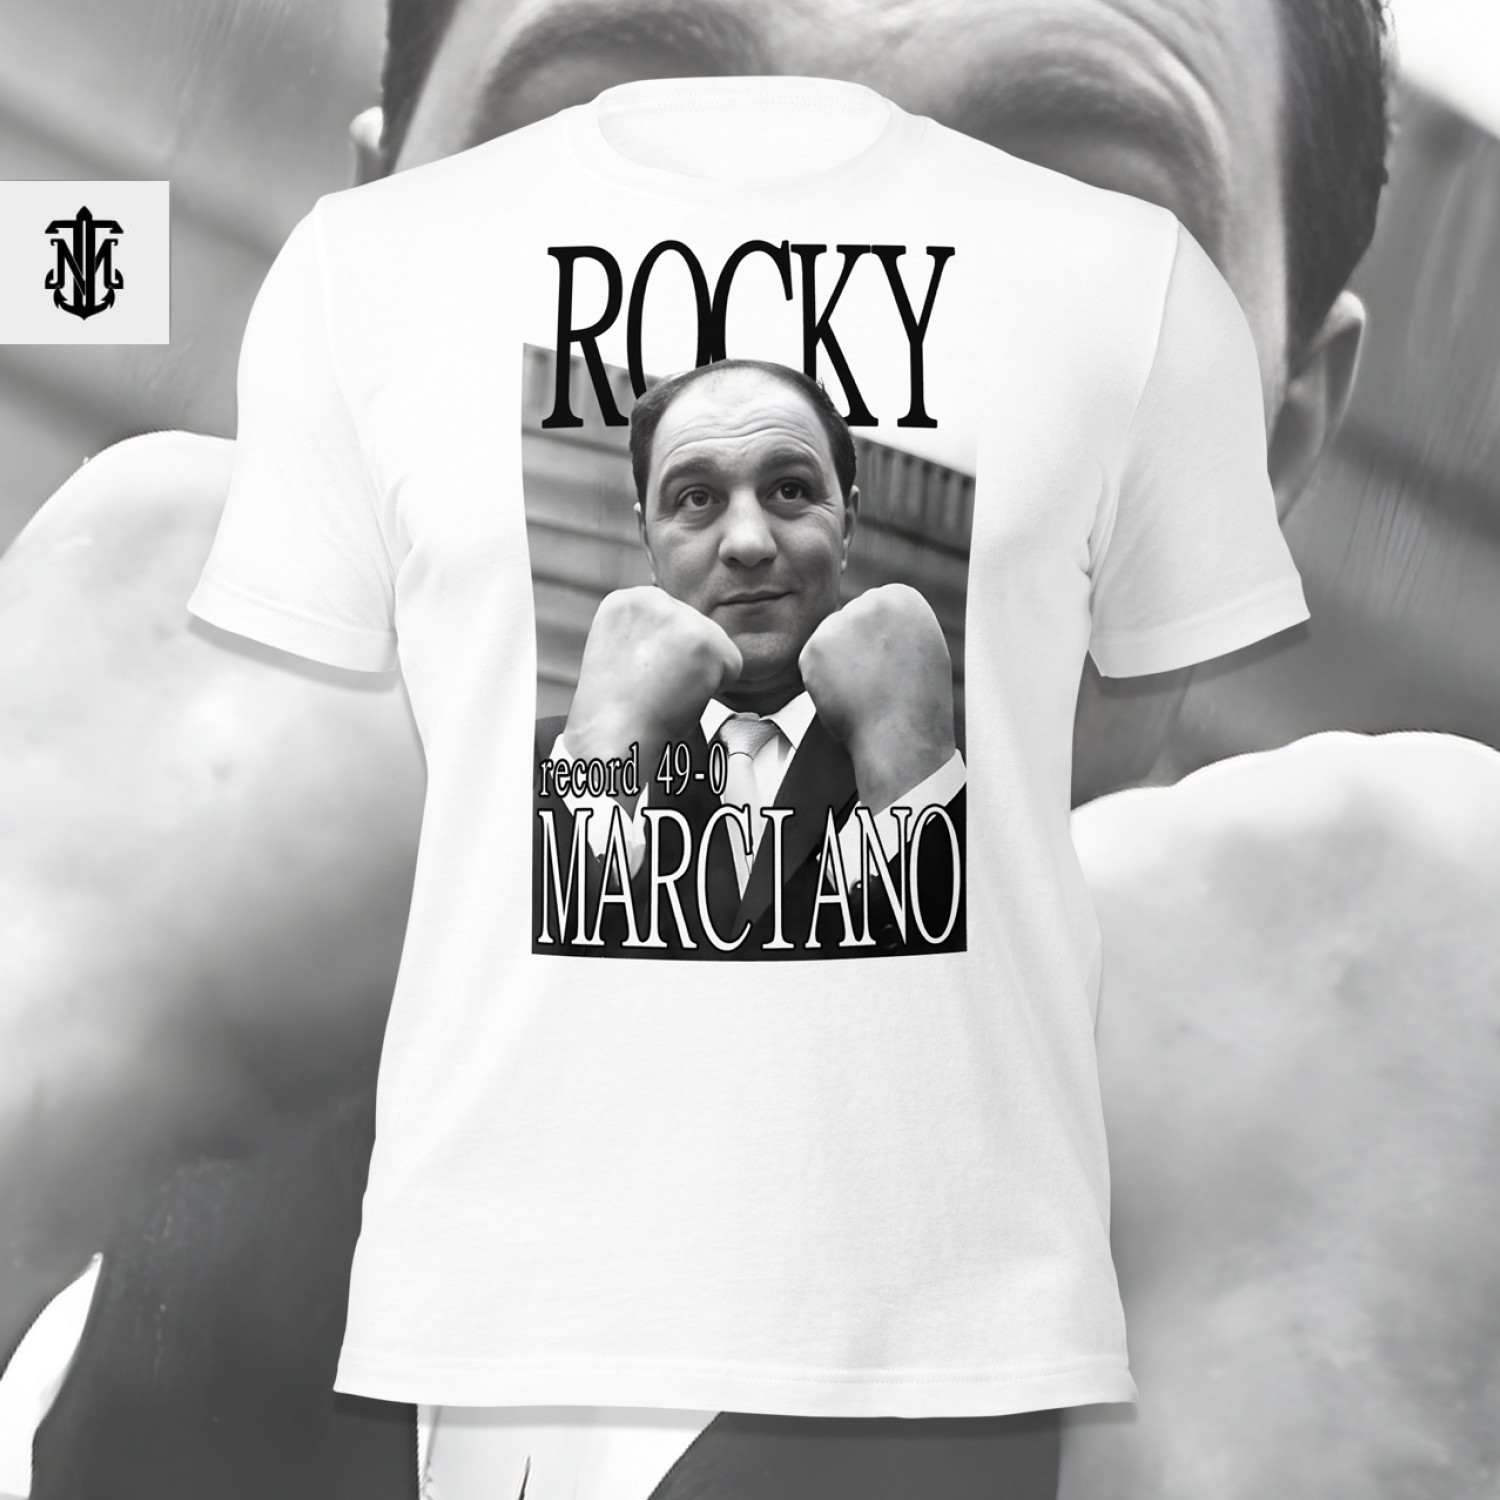 Buy a t-shirt - Rocky Marciano